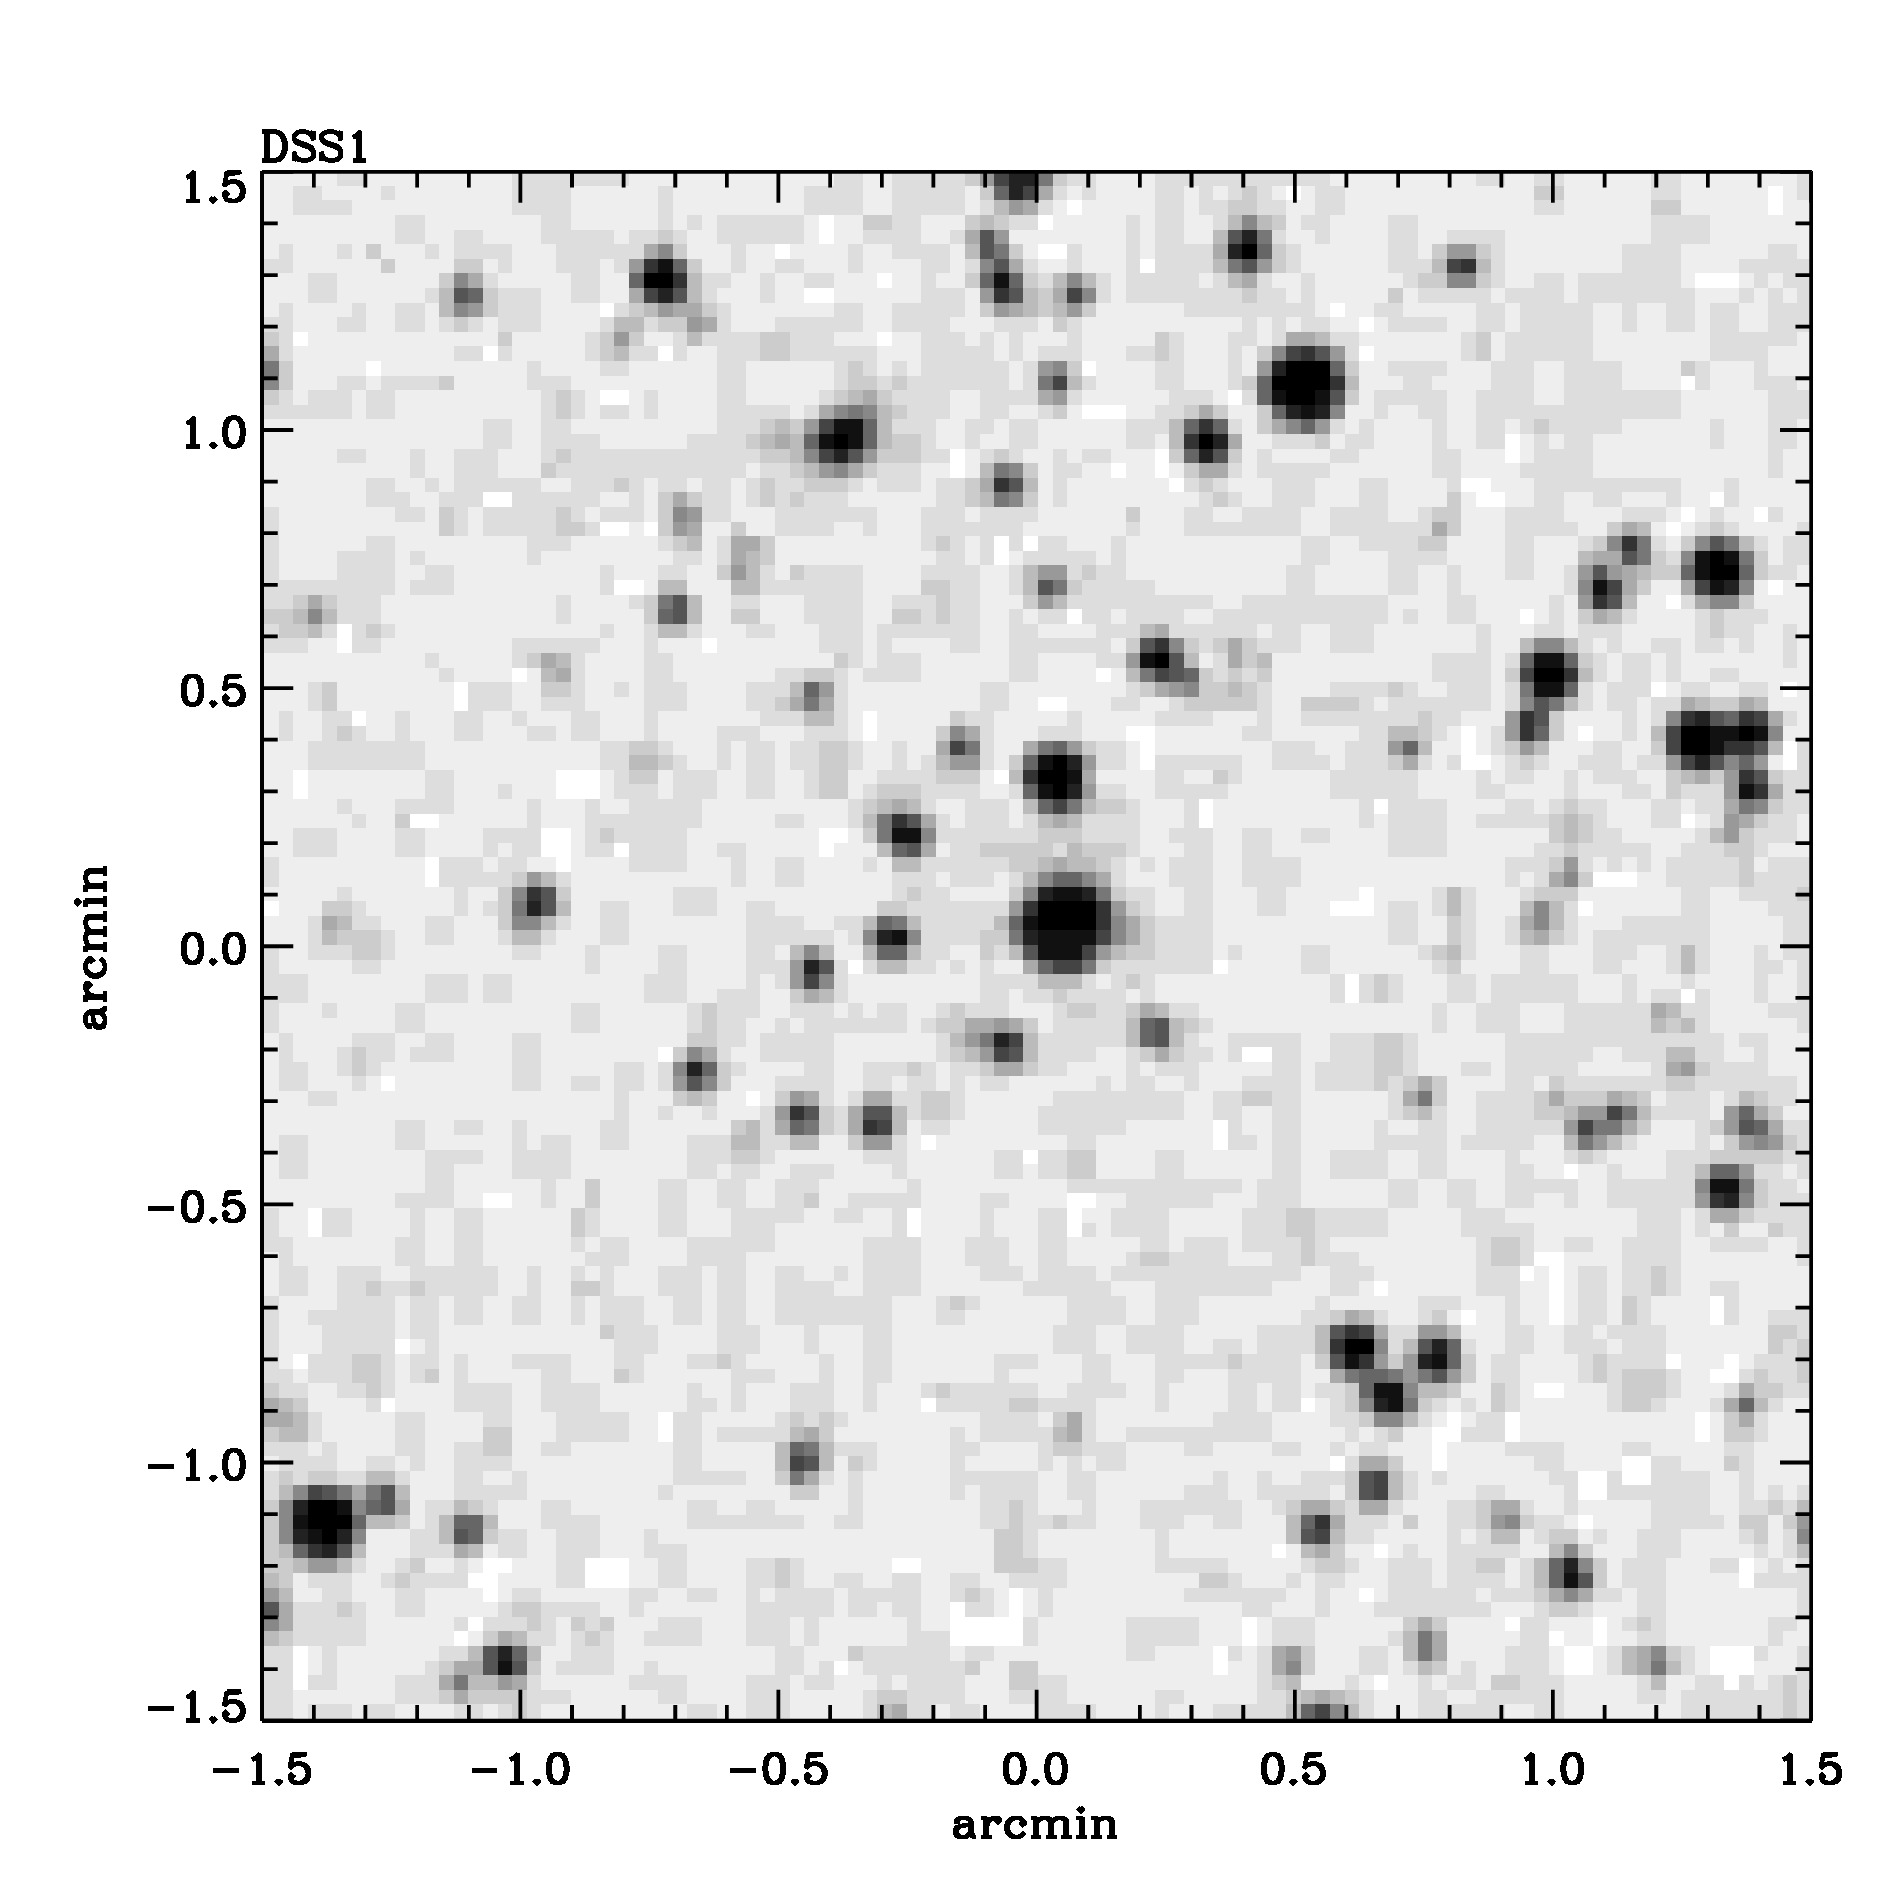 Optical image for SWIFT J1852.8+3002